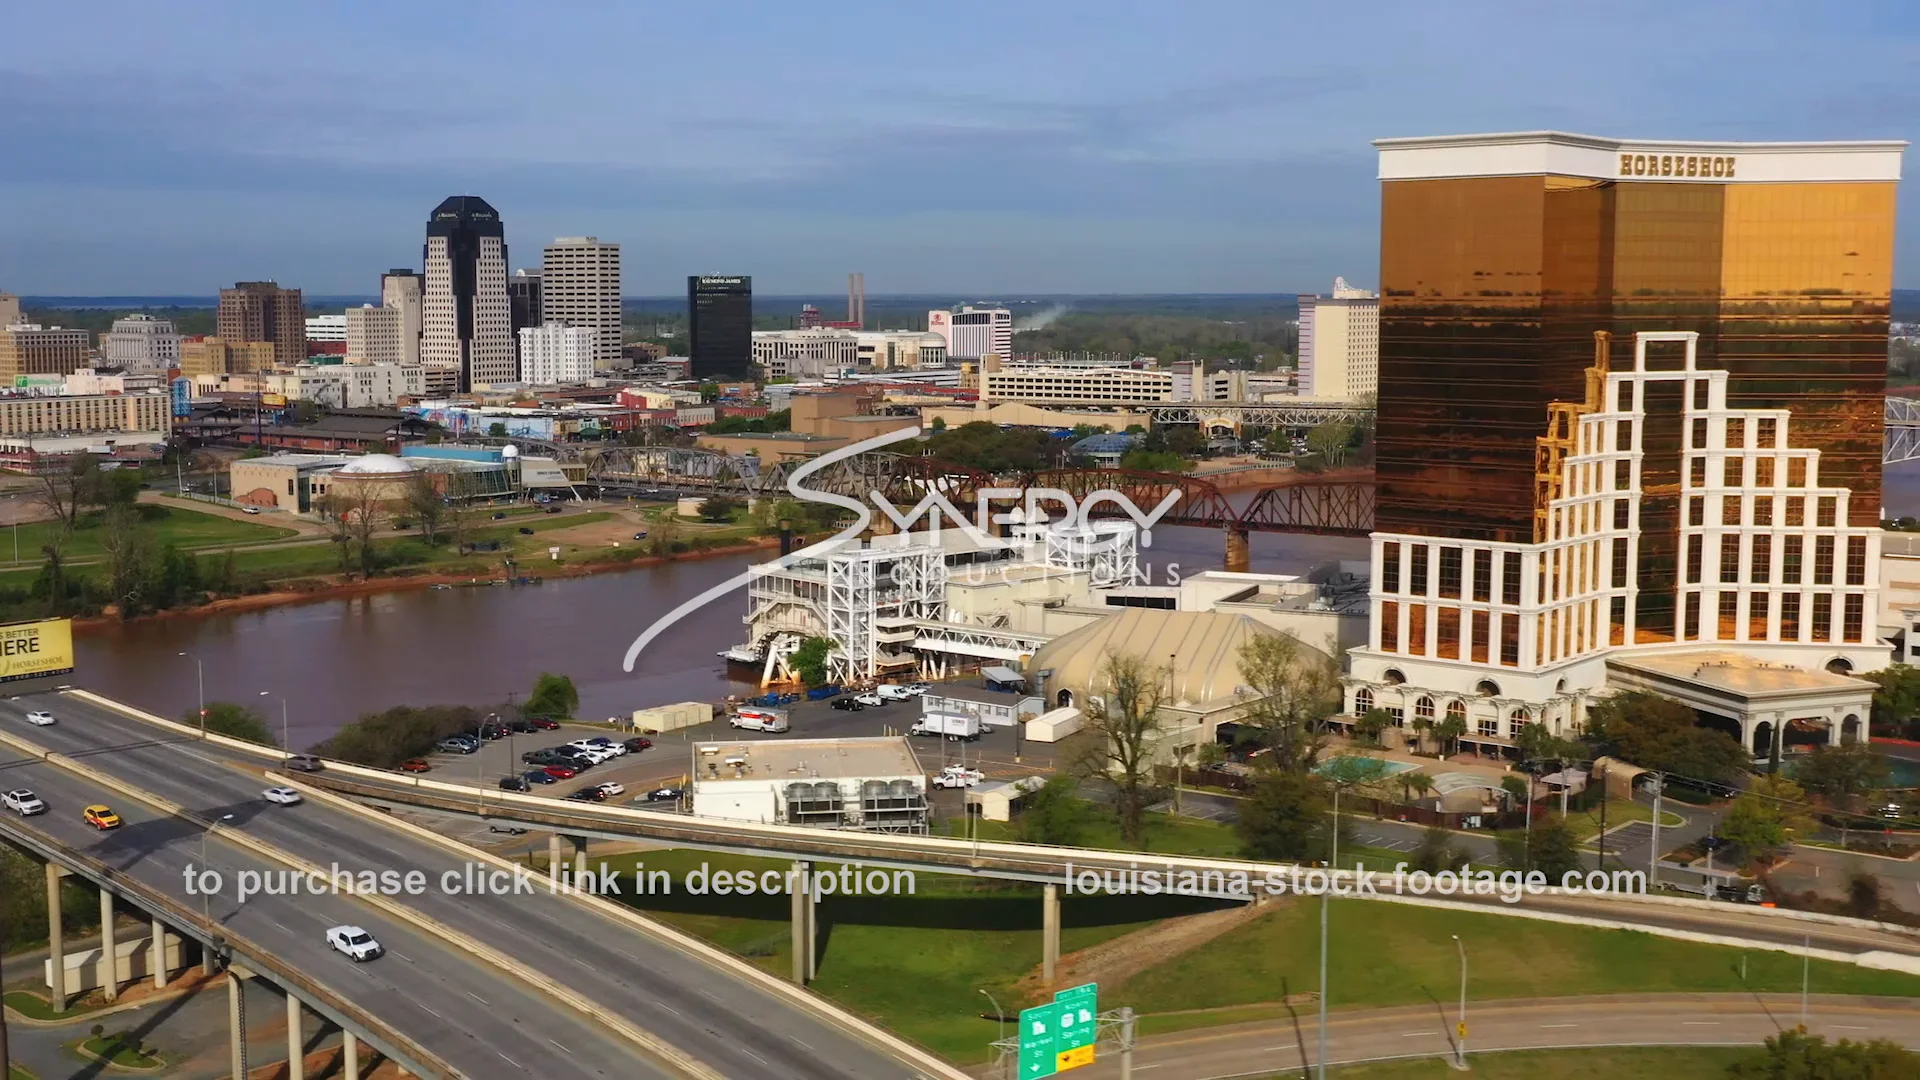 Horseshoe Casino Hotel seen from the river in Shreveport Louisiana